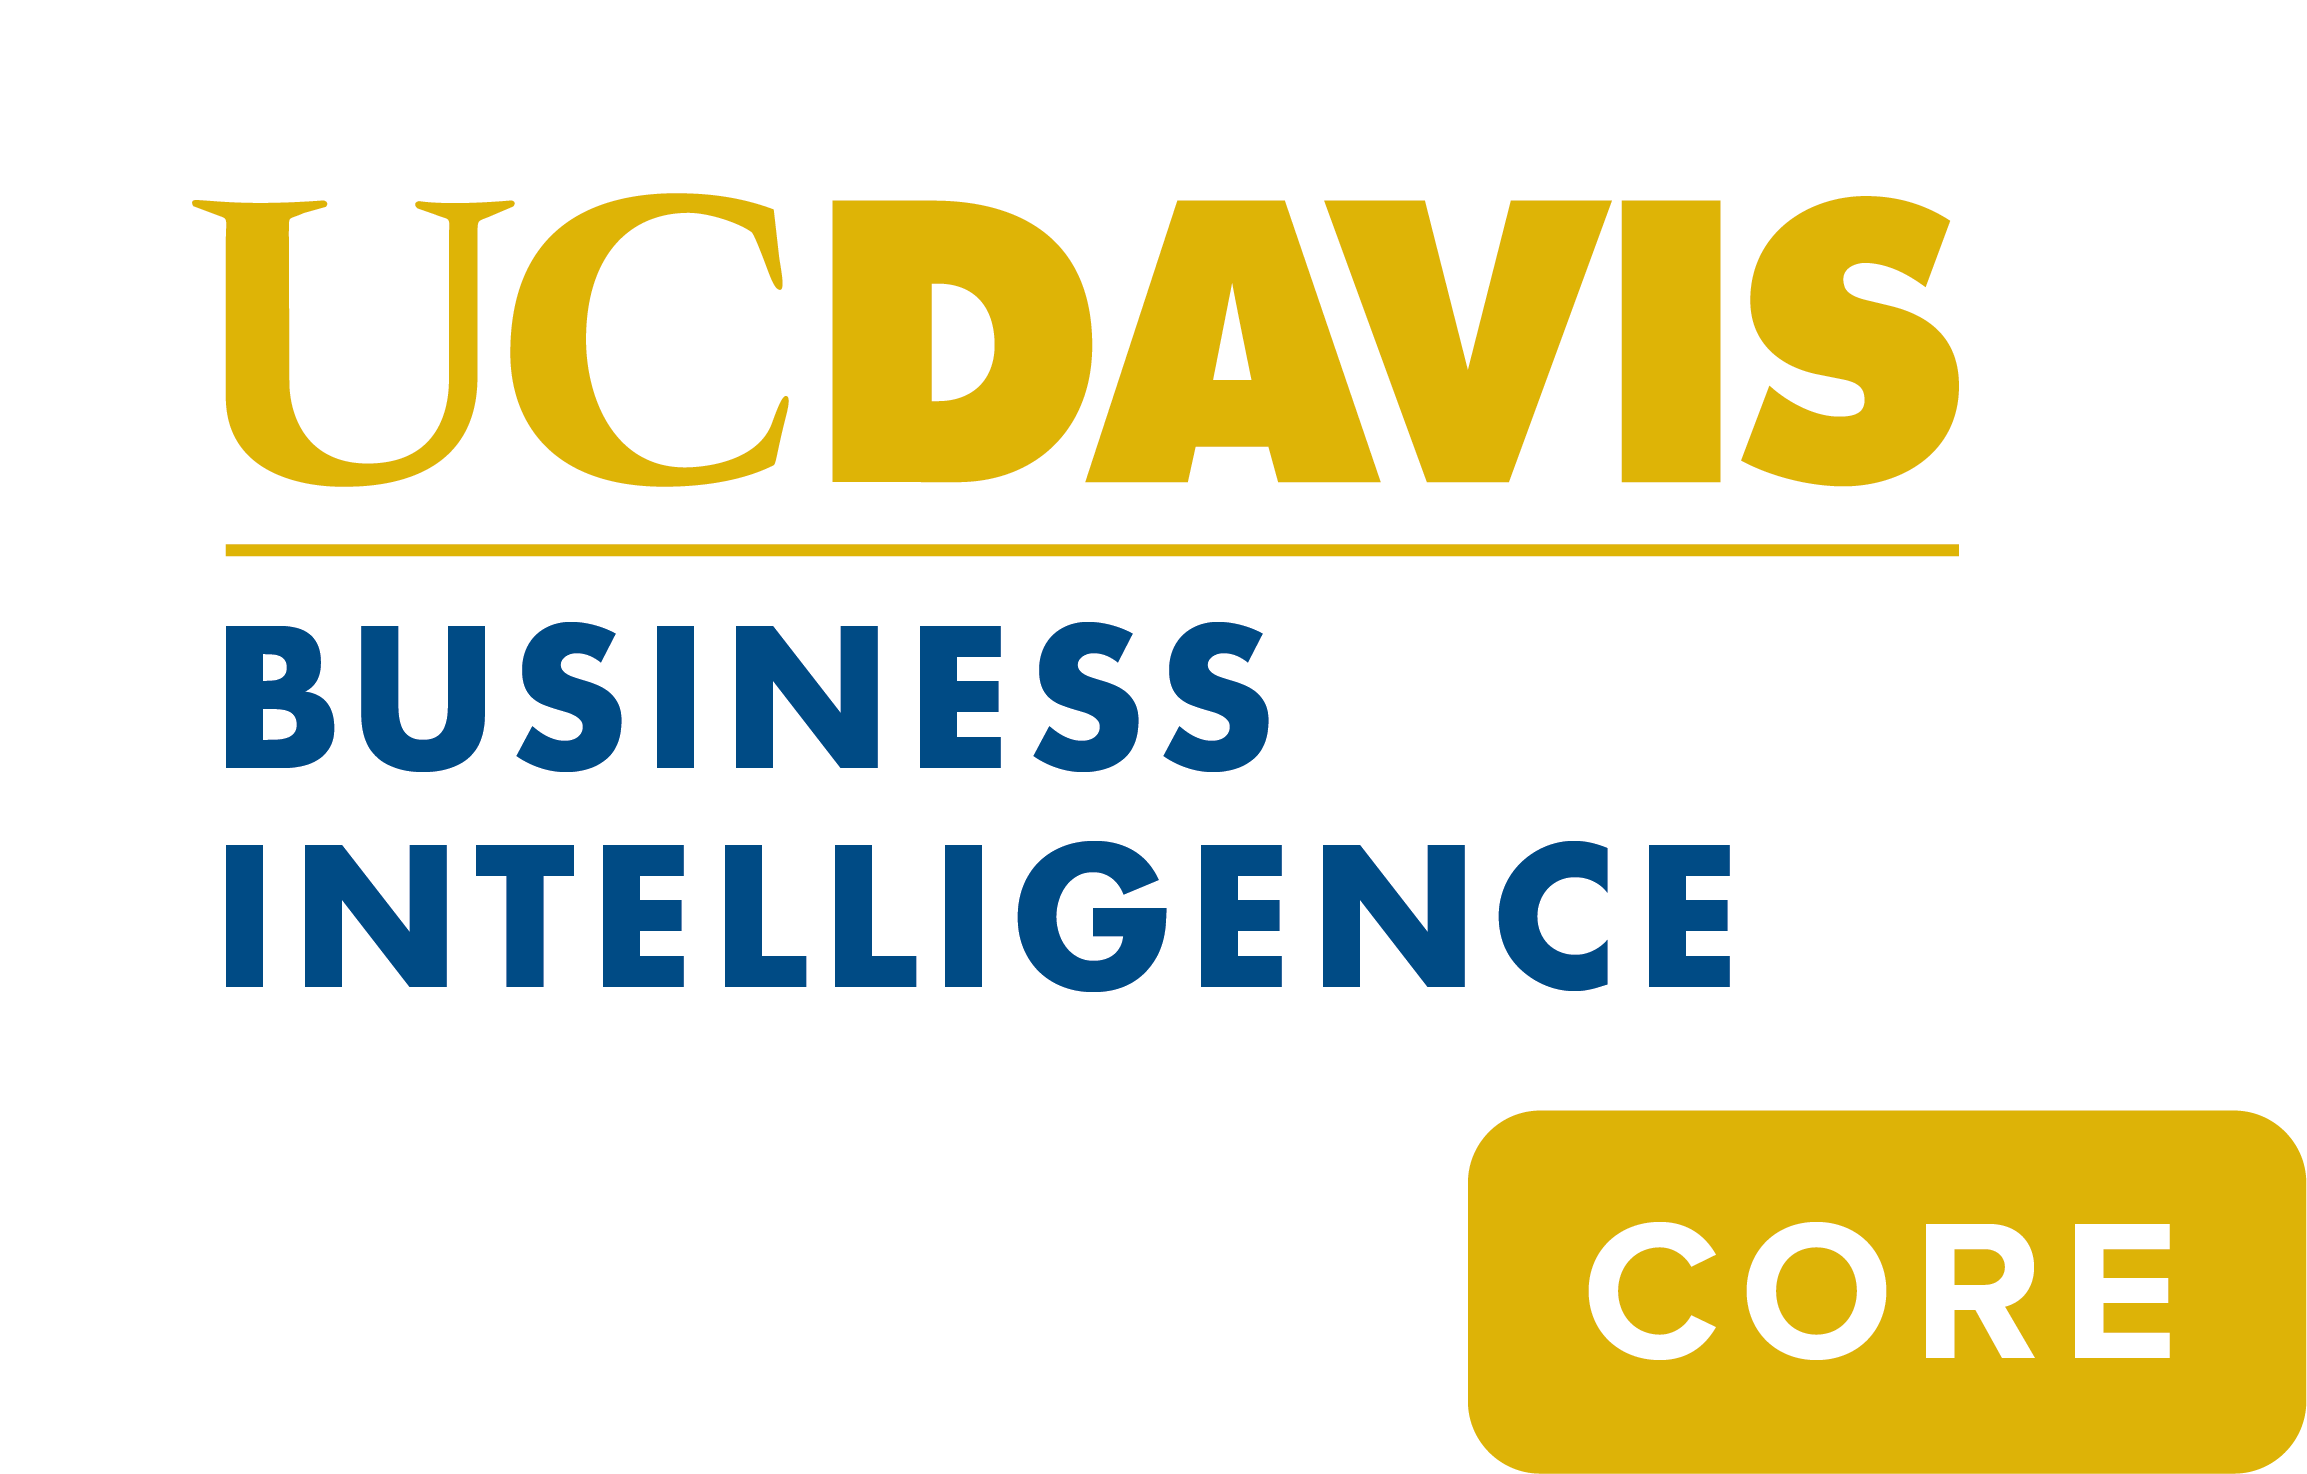 business intelligence core logo